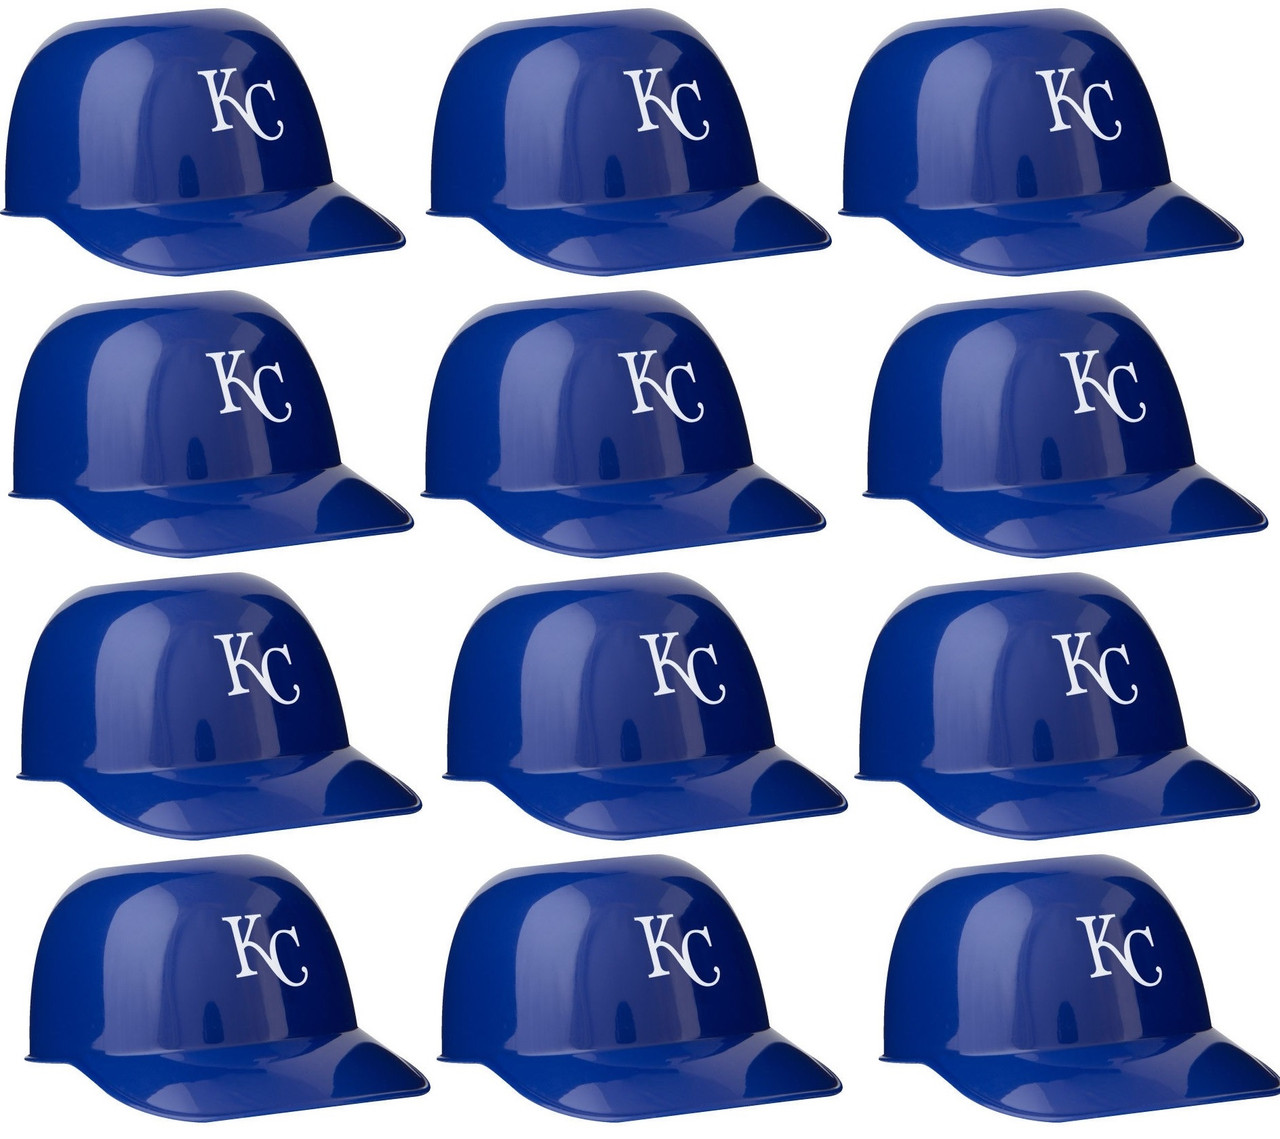 Rawlings MLB Team Snack Size Helmets